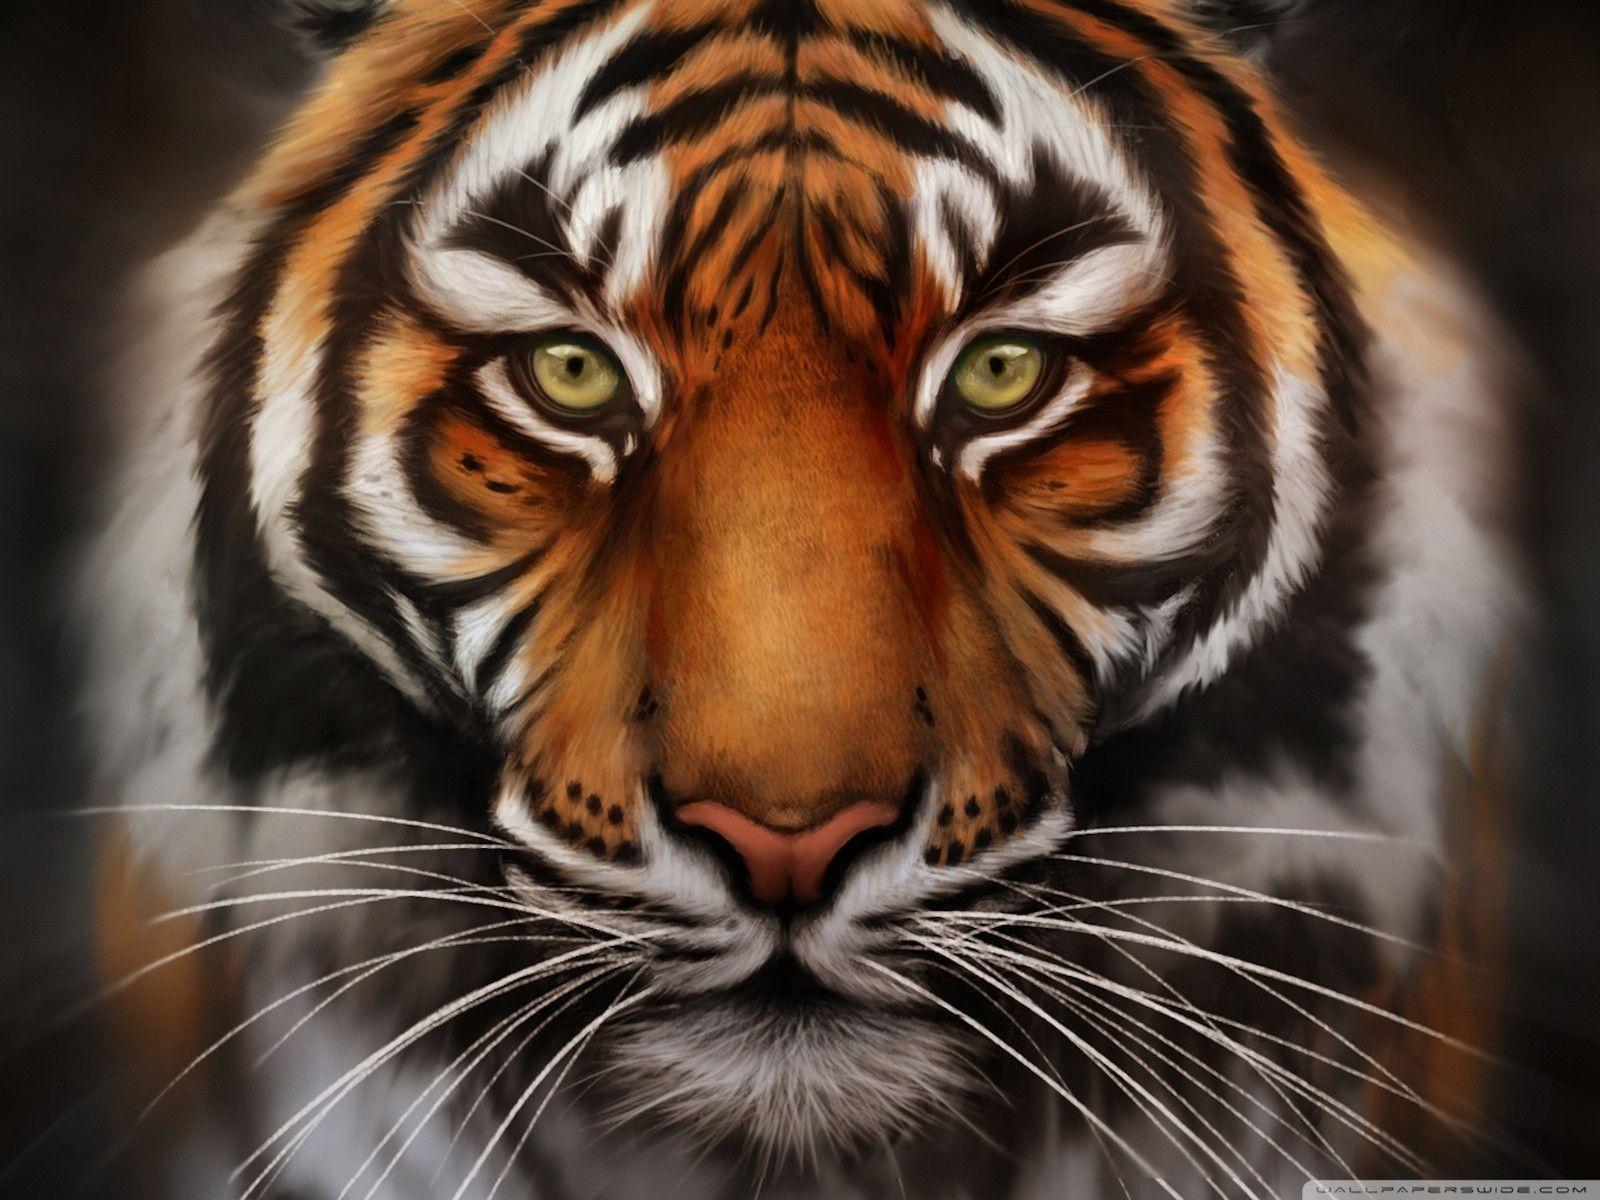 Tiger face wallpaper HD